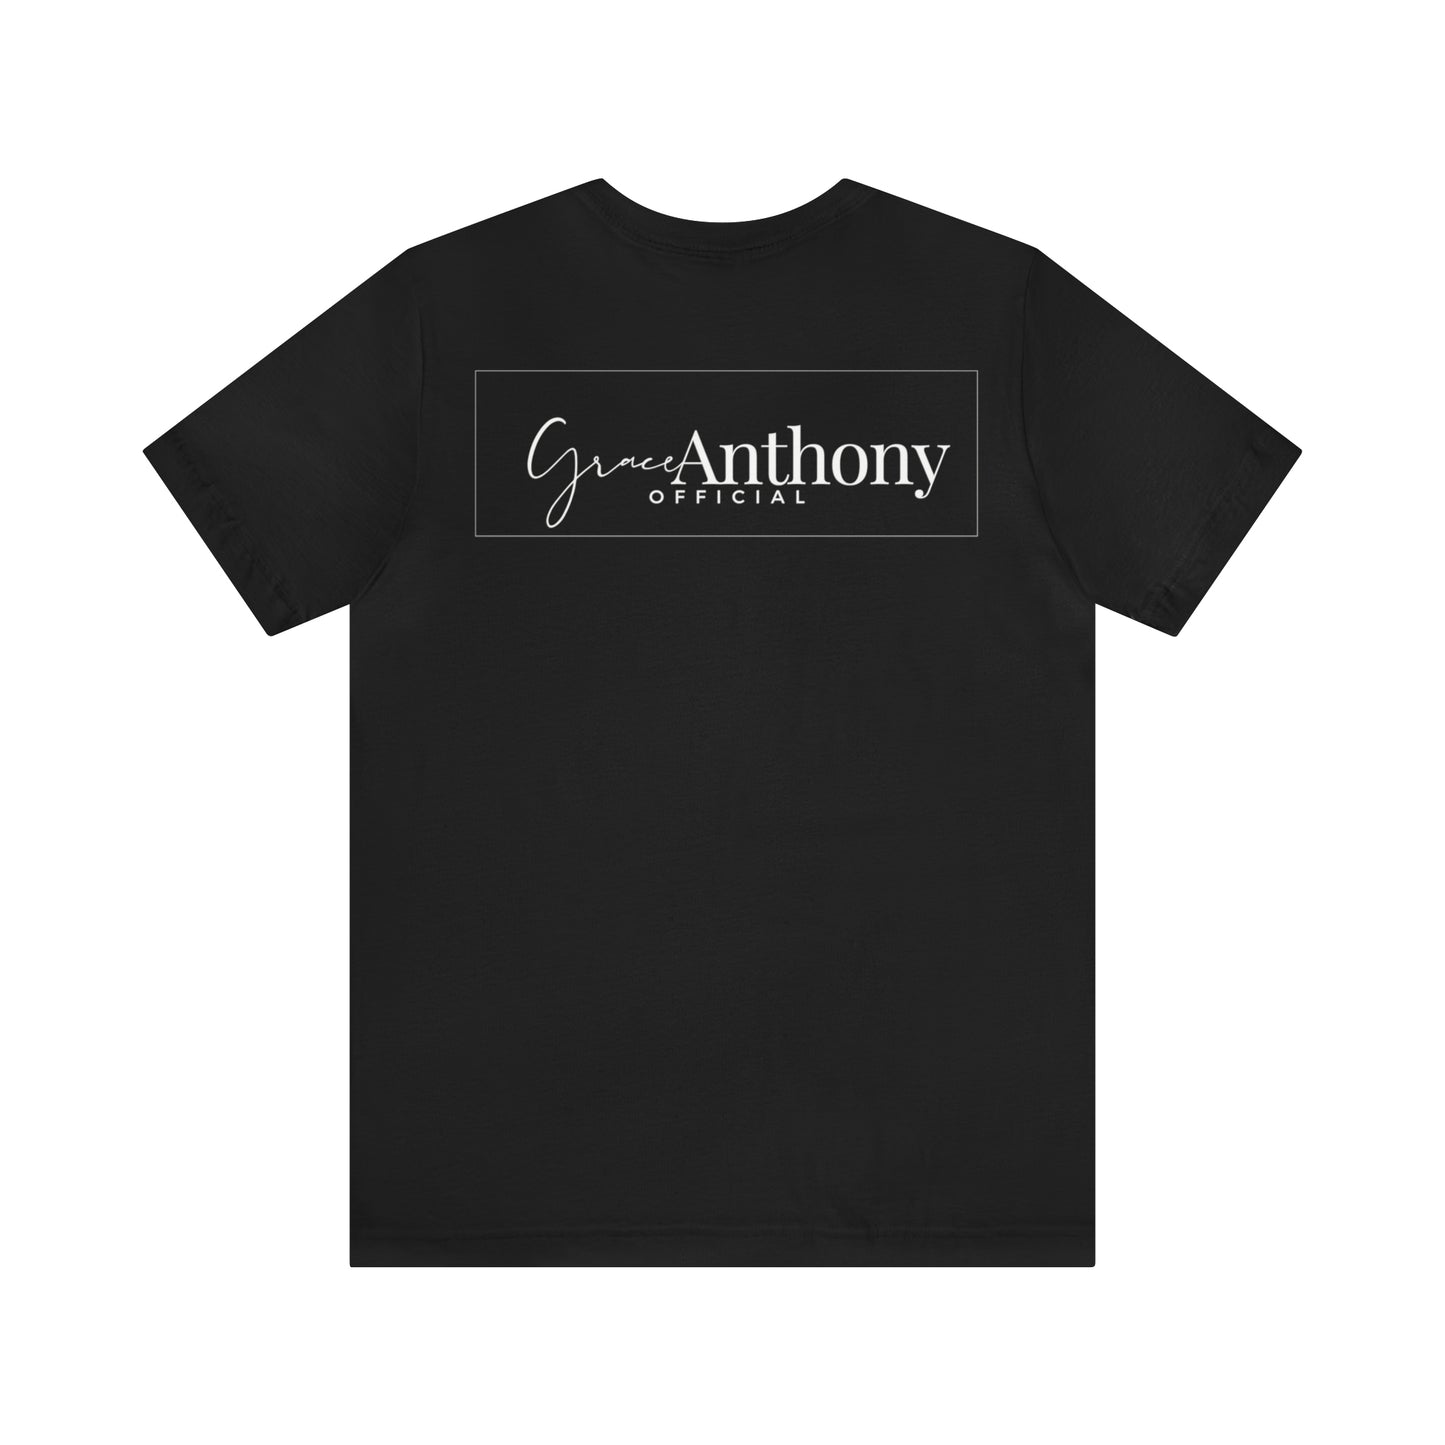 Grace Anthony Base Logo Shirt, Logo Shirt, Brand Shirt for Men and Women, Gift for Men, Gift for Women, Graphic Vintage Tee, Everyday Tee